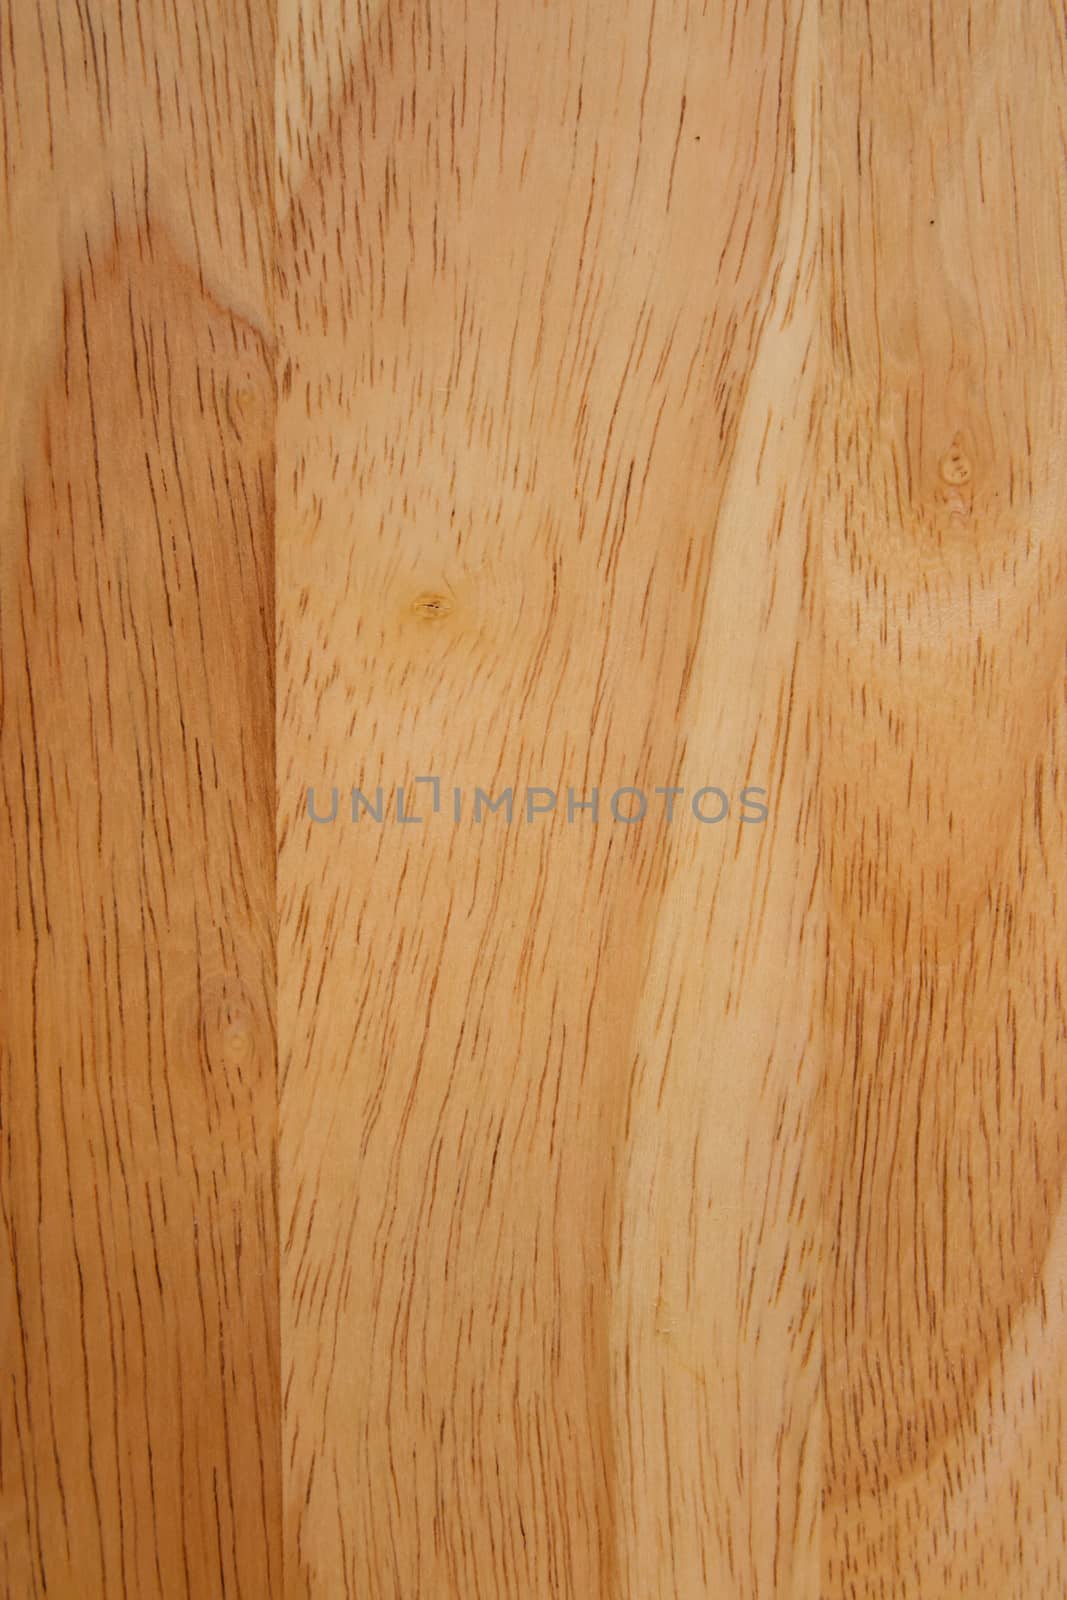 Wooden texture by pilotL39